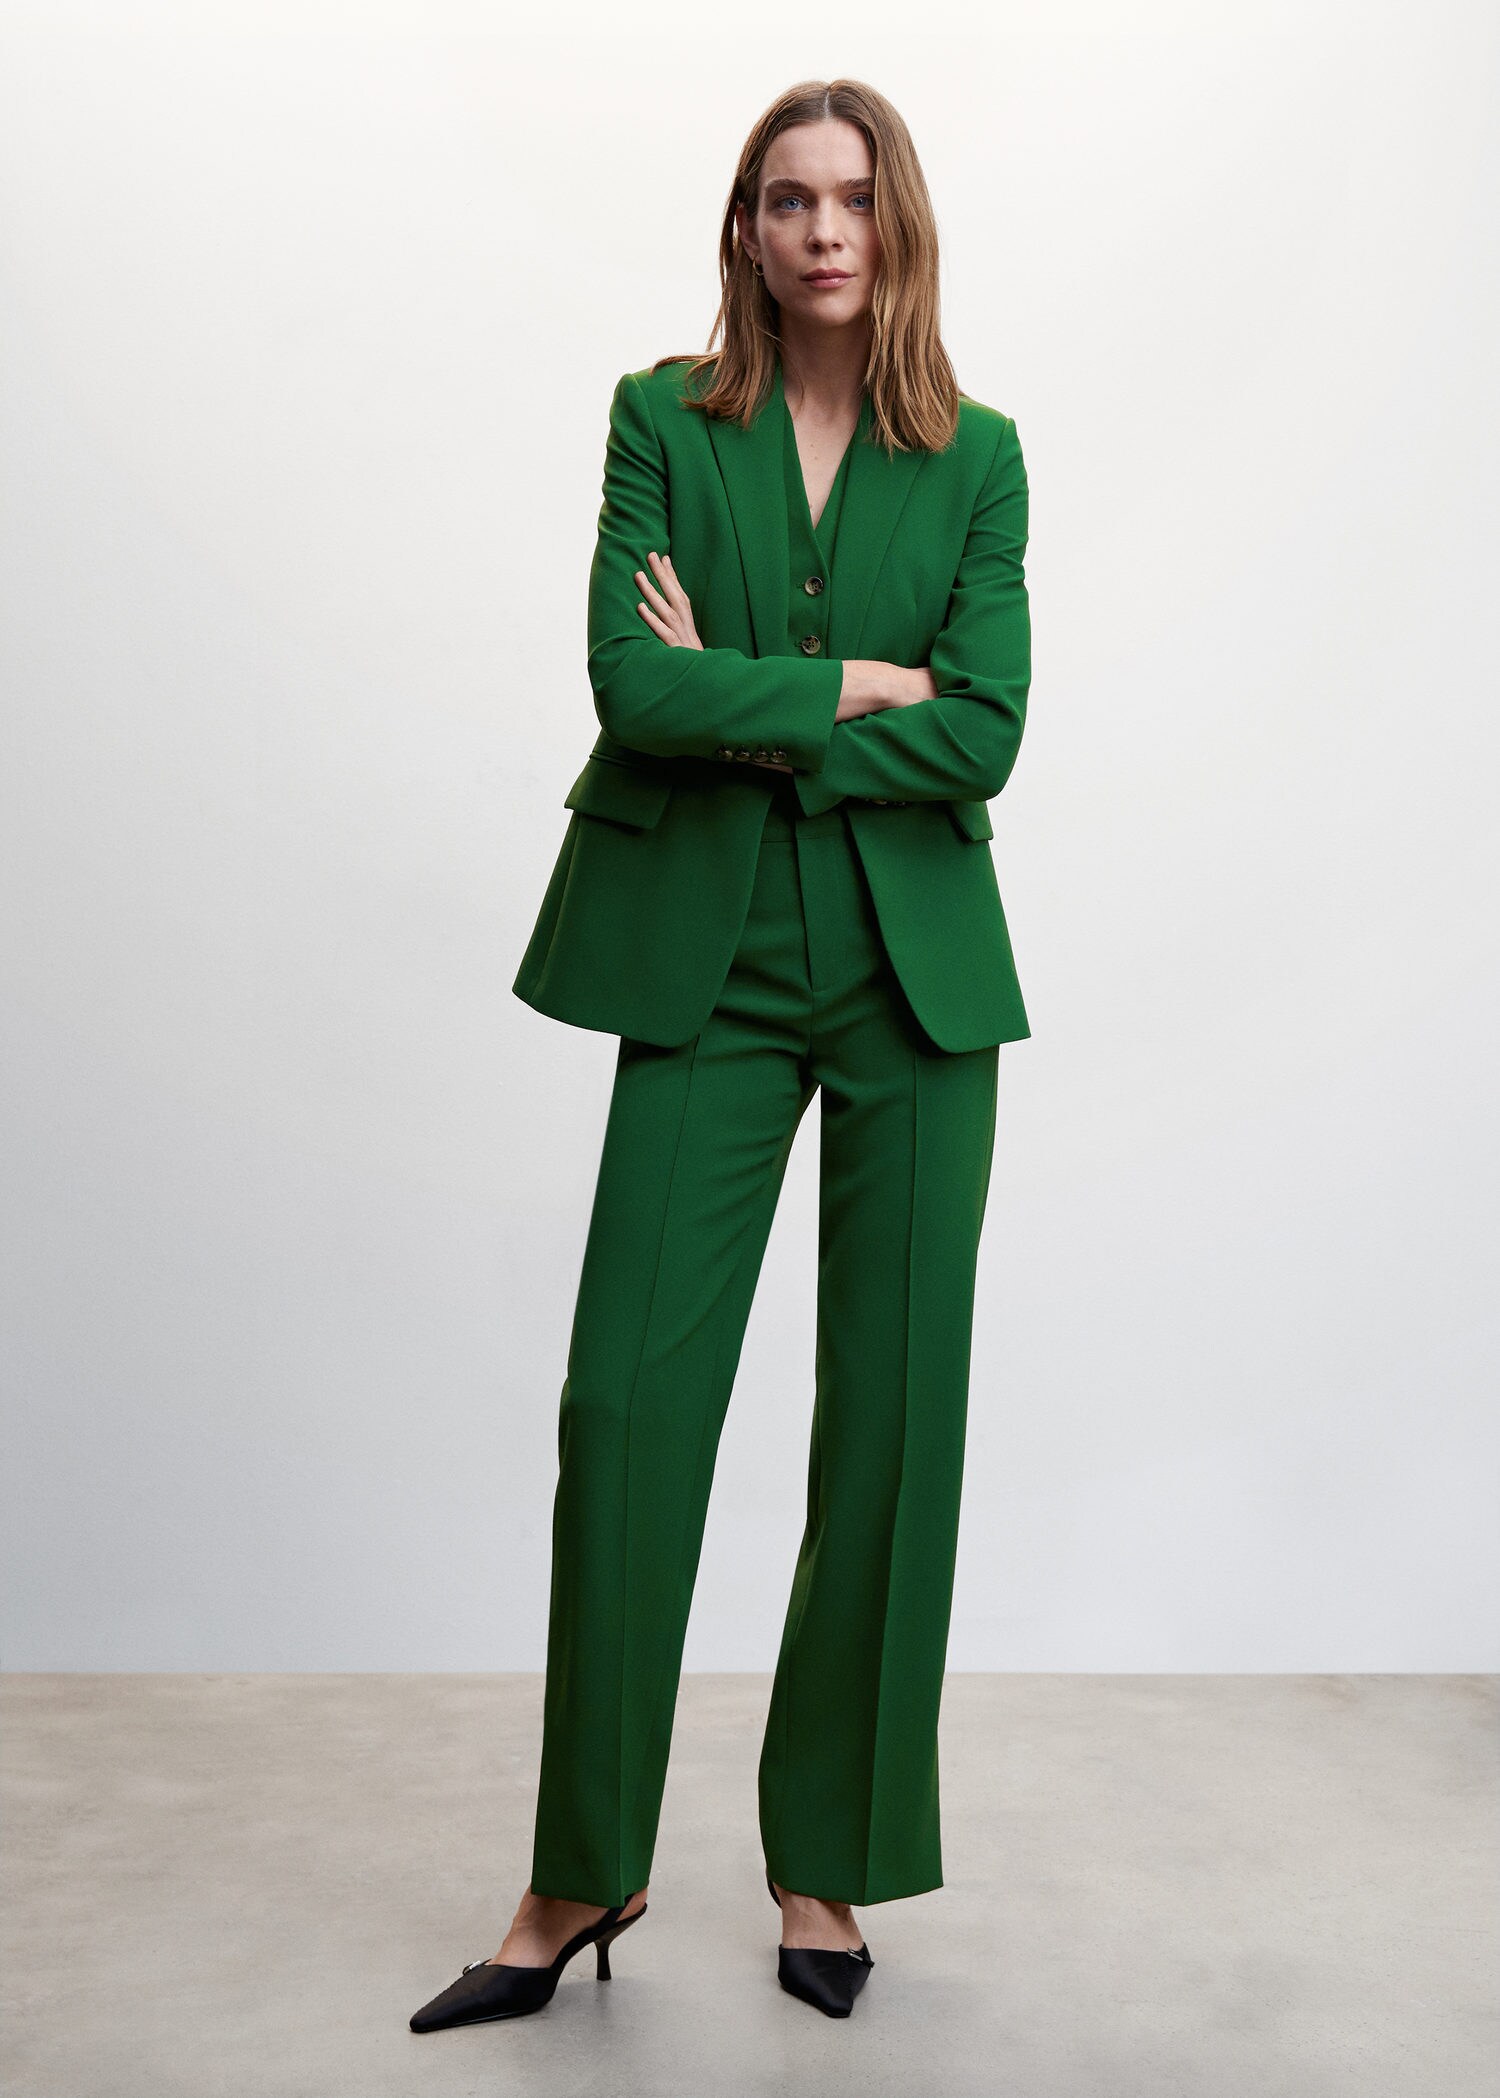 Pantalon verde mujer